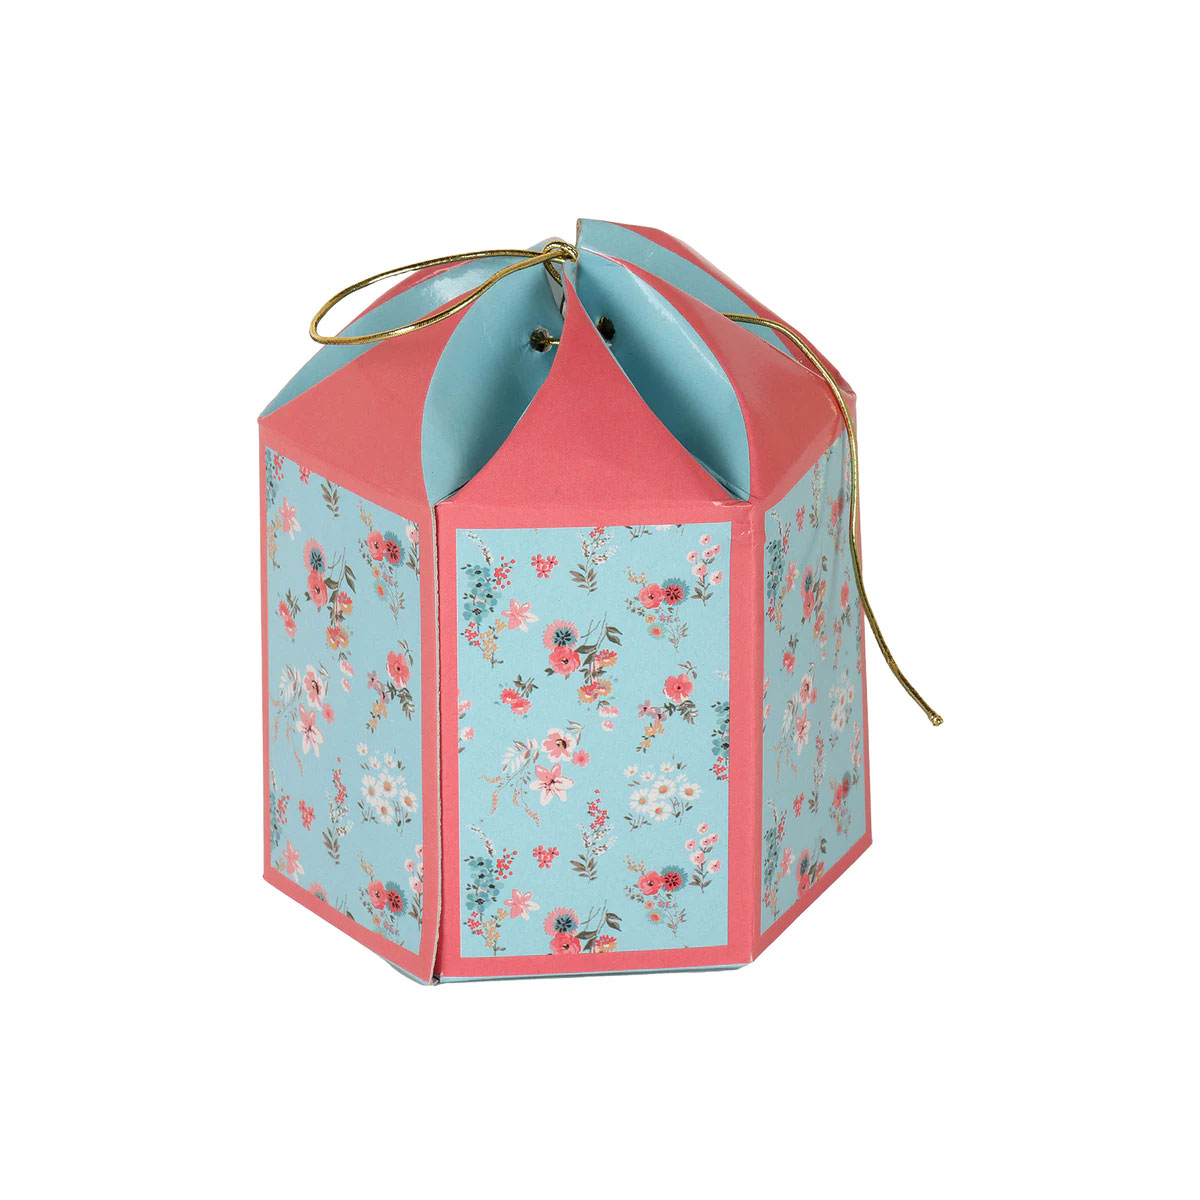 Gift-Hexagon-Boxes